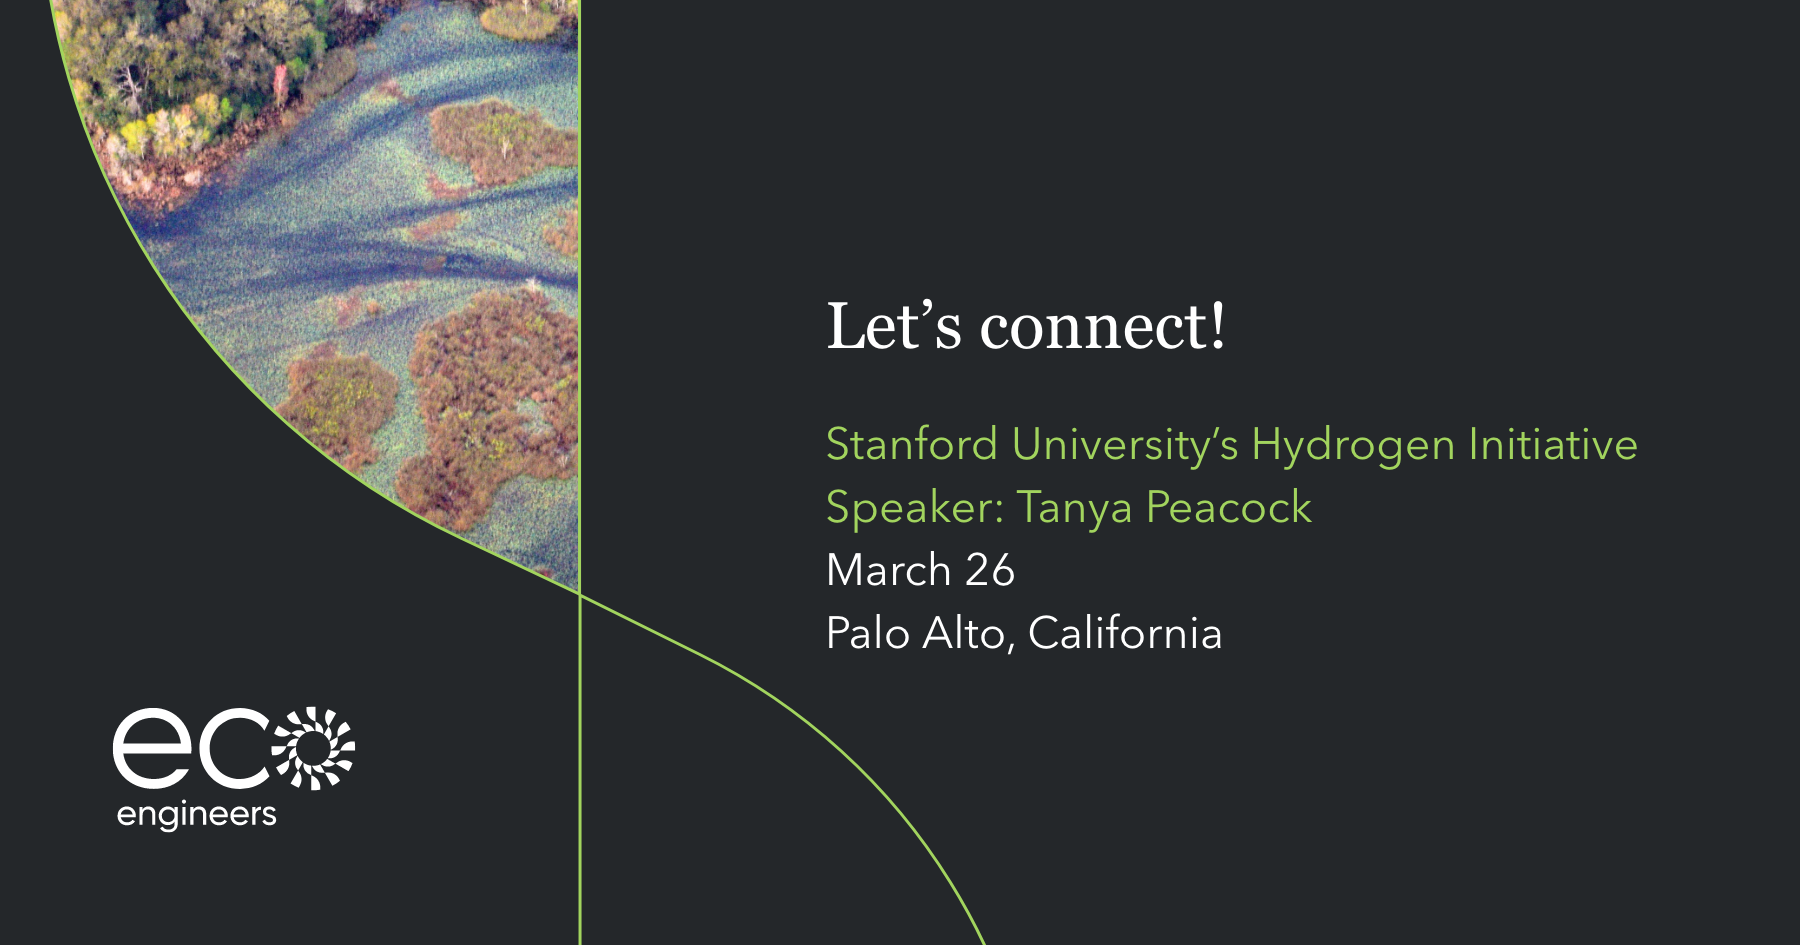 Stanford University’s Hydrogen Initiative